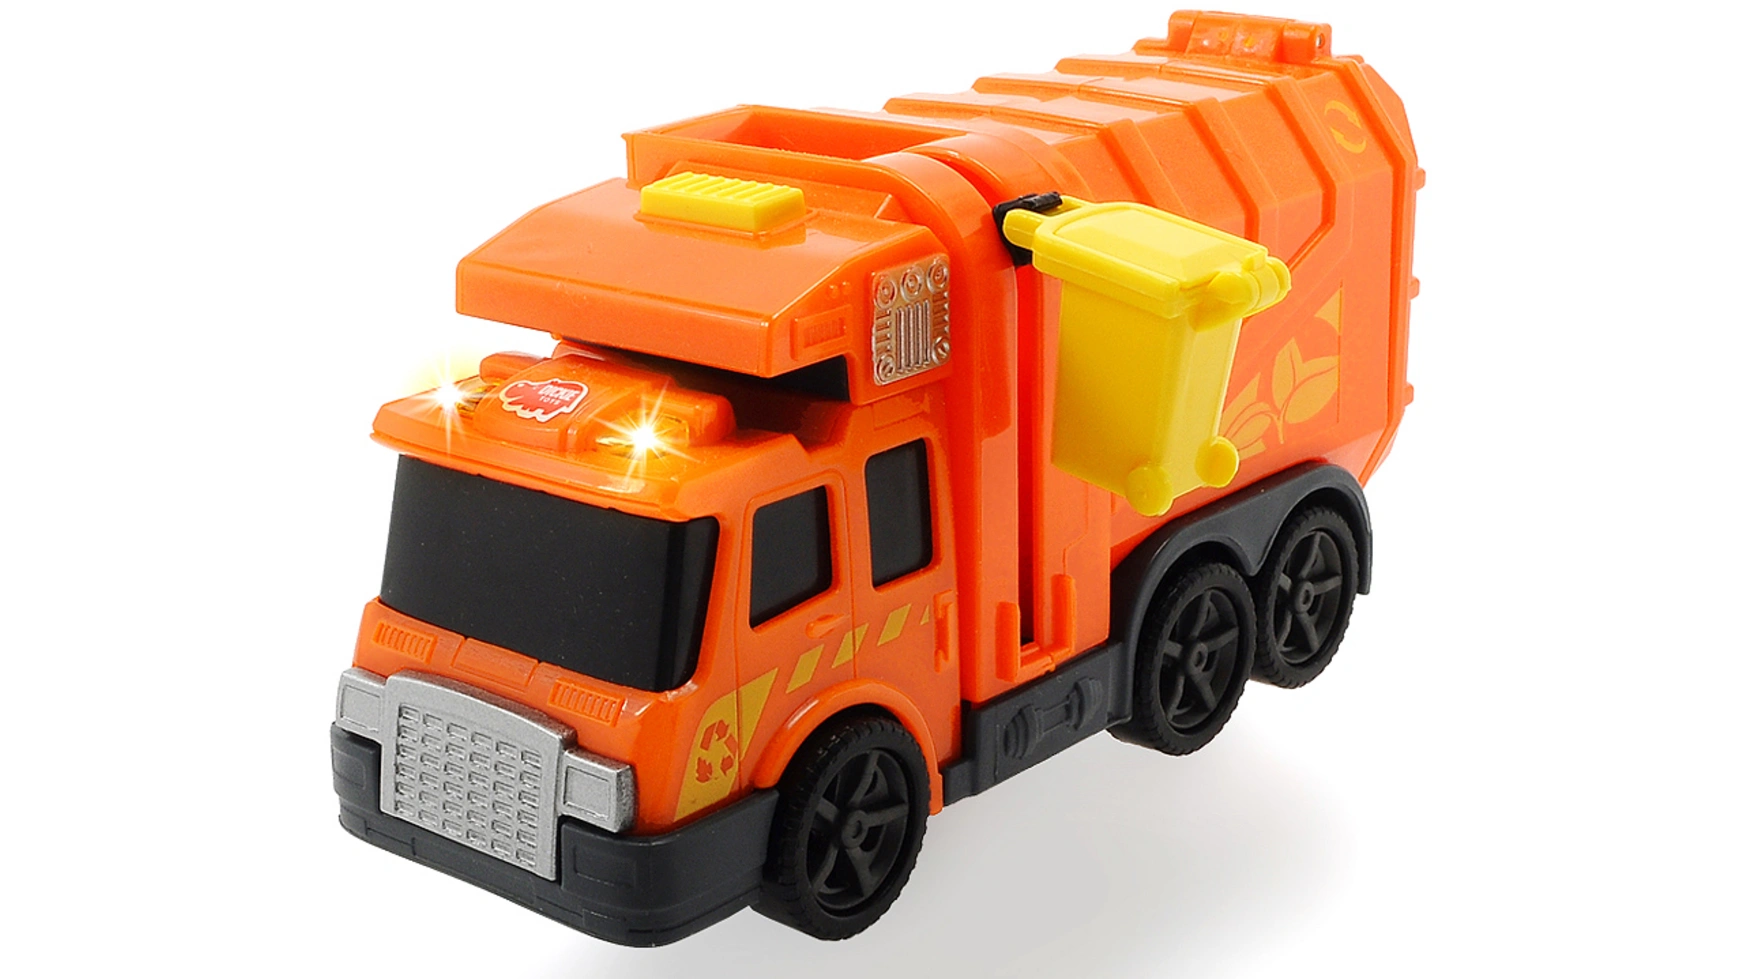 Dickie Toys Городской уборщик грузовик dickie toys volvo 3724001 26 см желтый серый